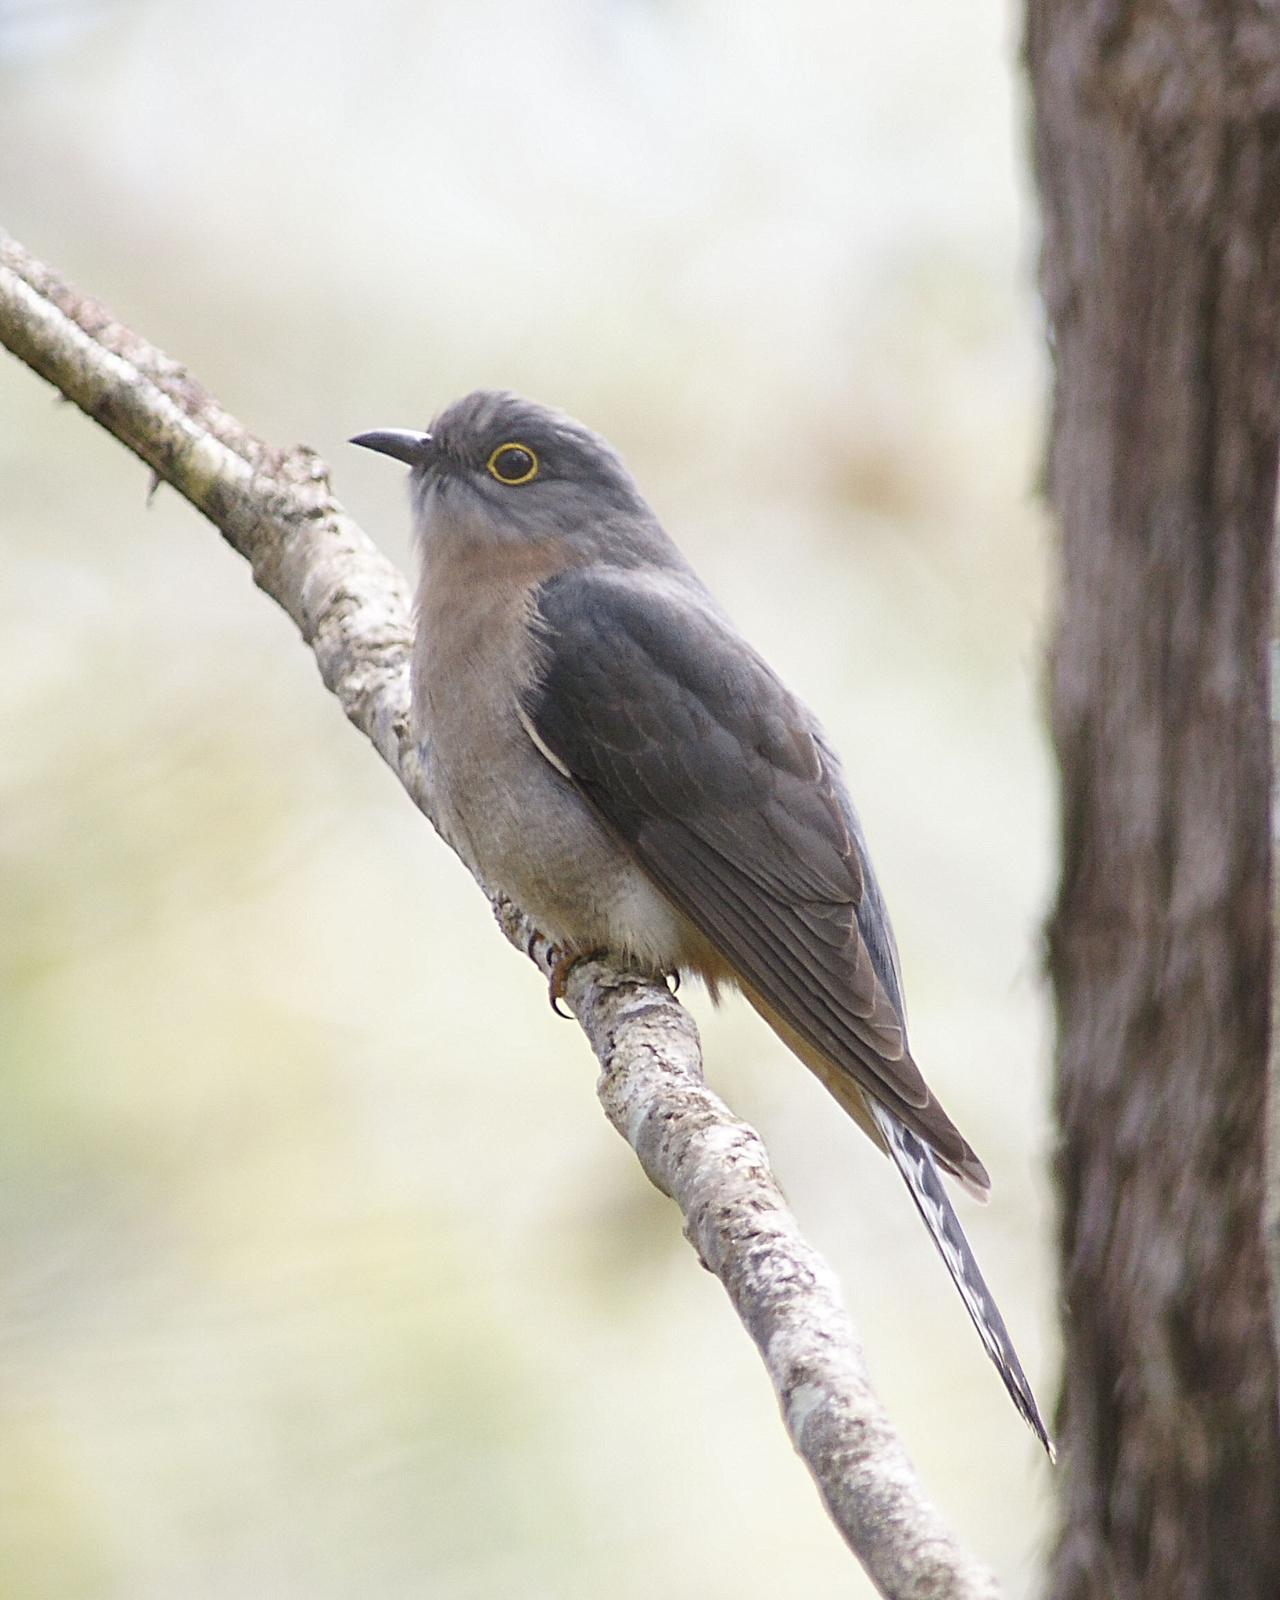 Fan-tailed Cuckoo Photo by Steve Percival